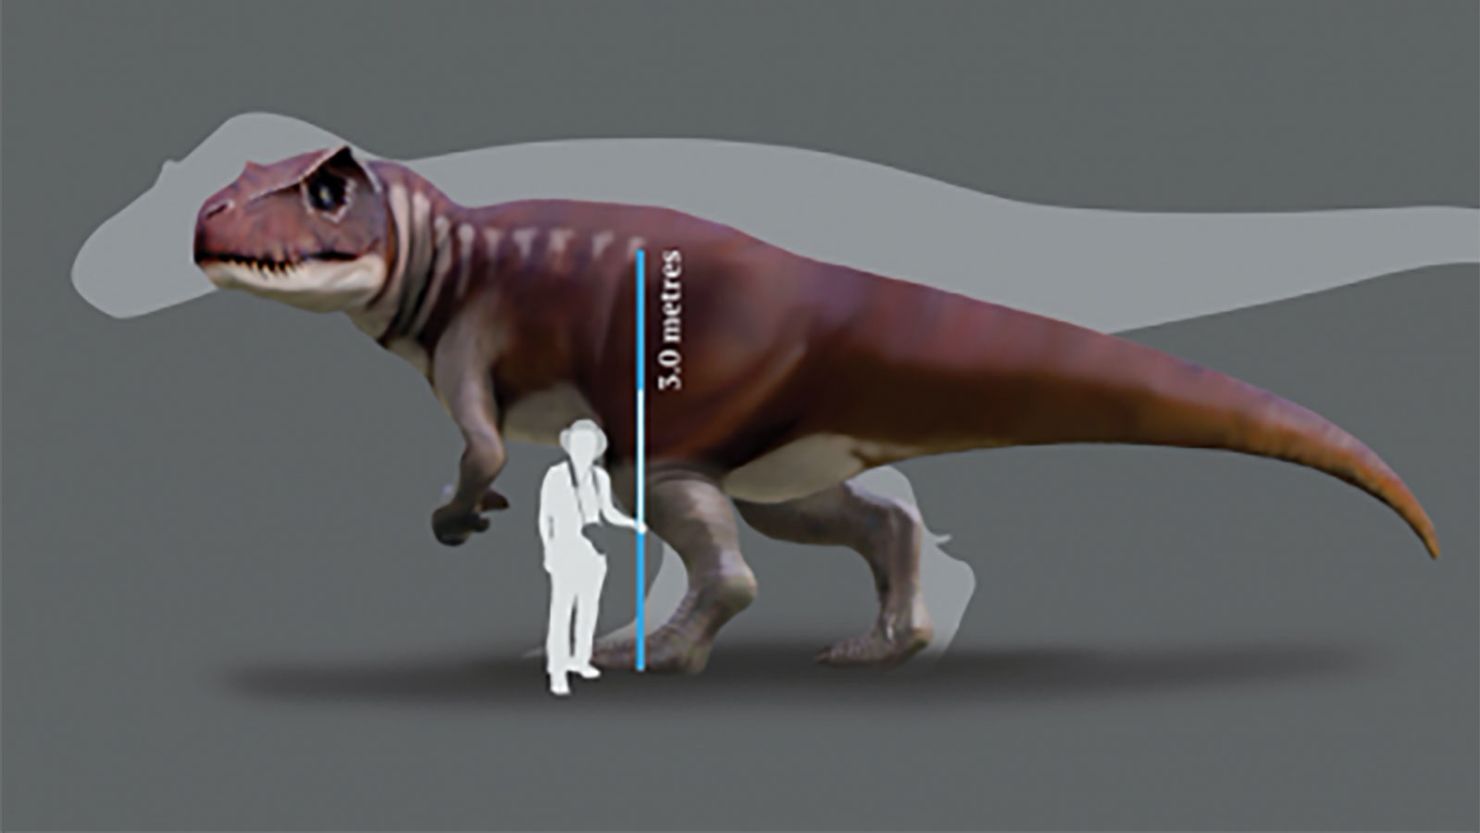 The large carnivorous dinosaur was slightly smaller than the Tyrannosaurus rex.